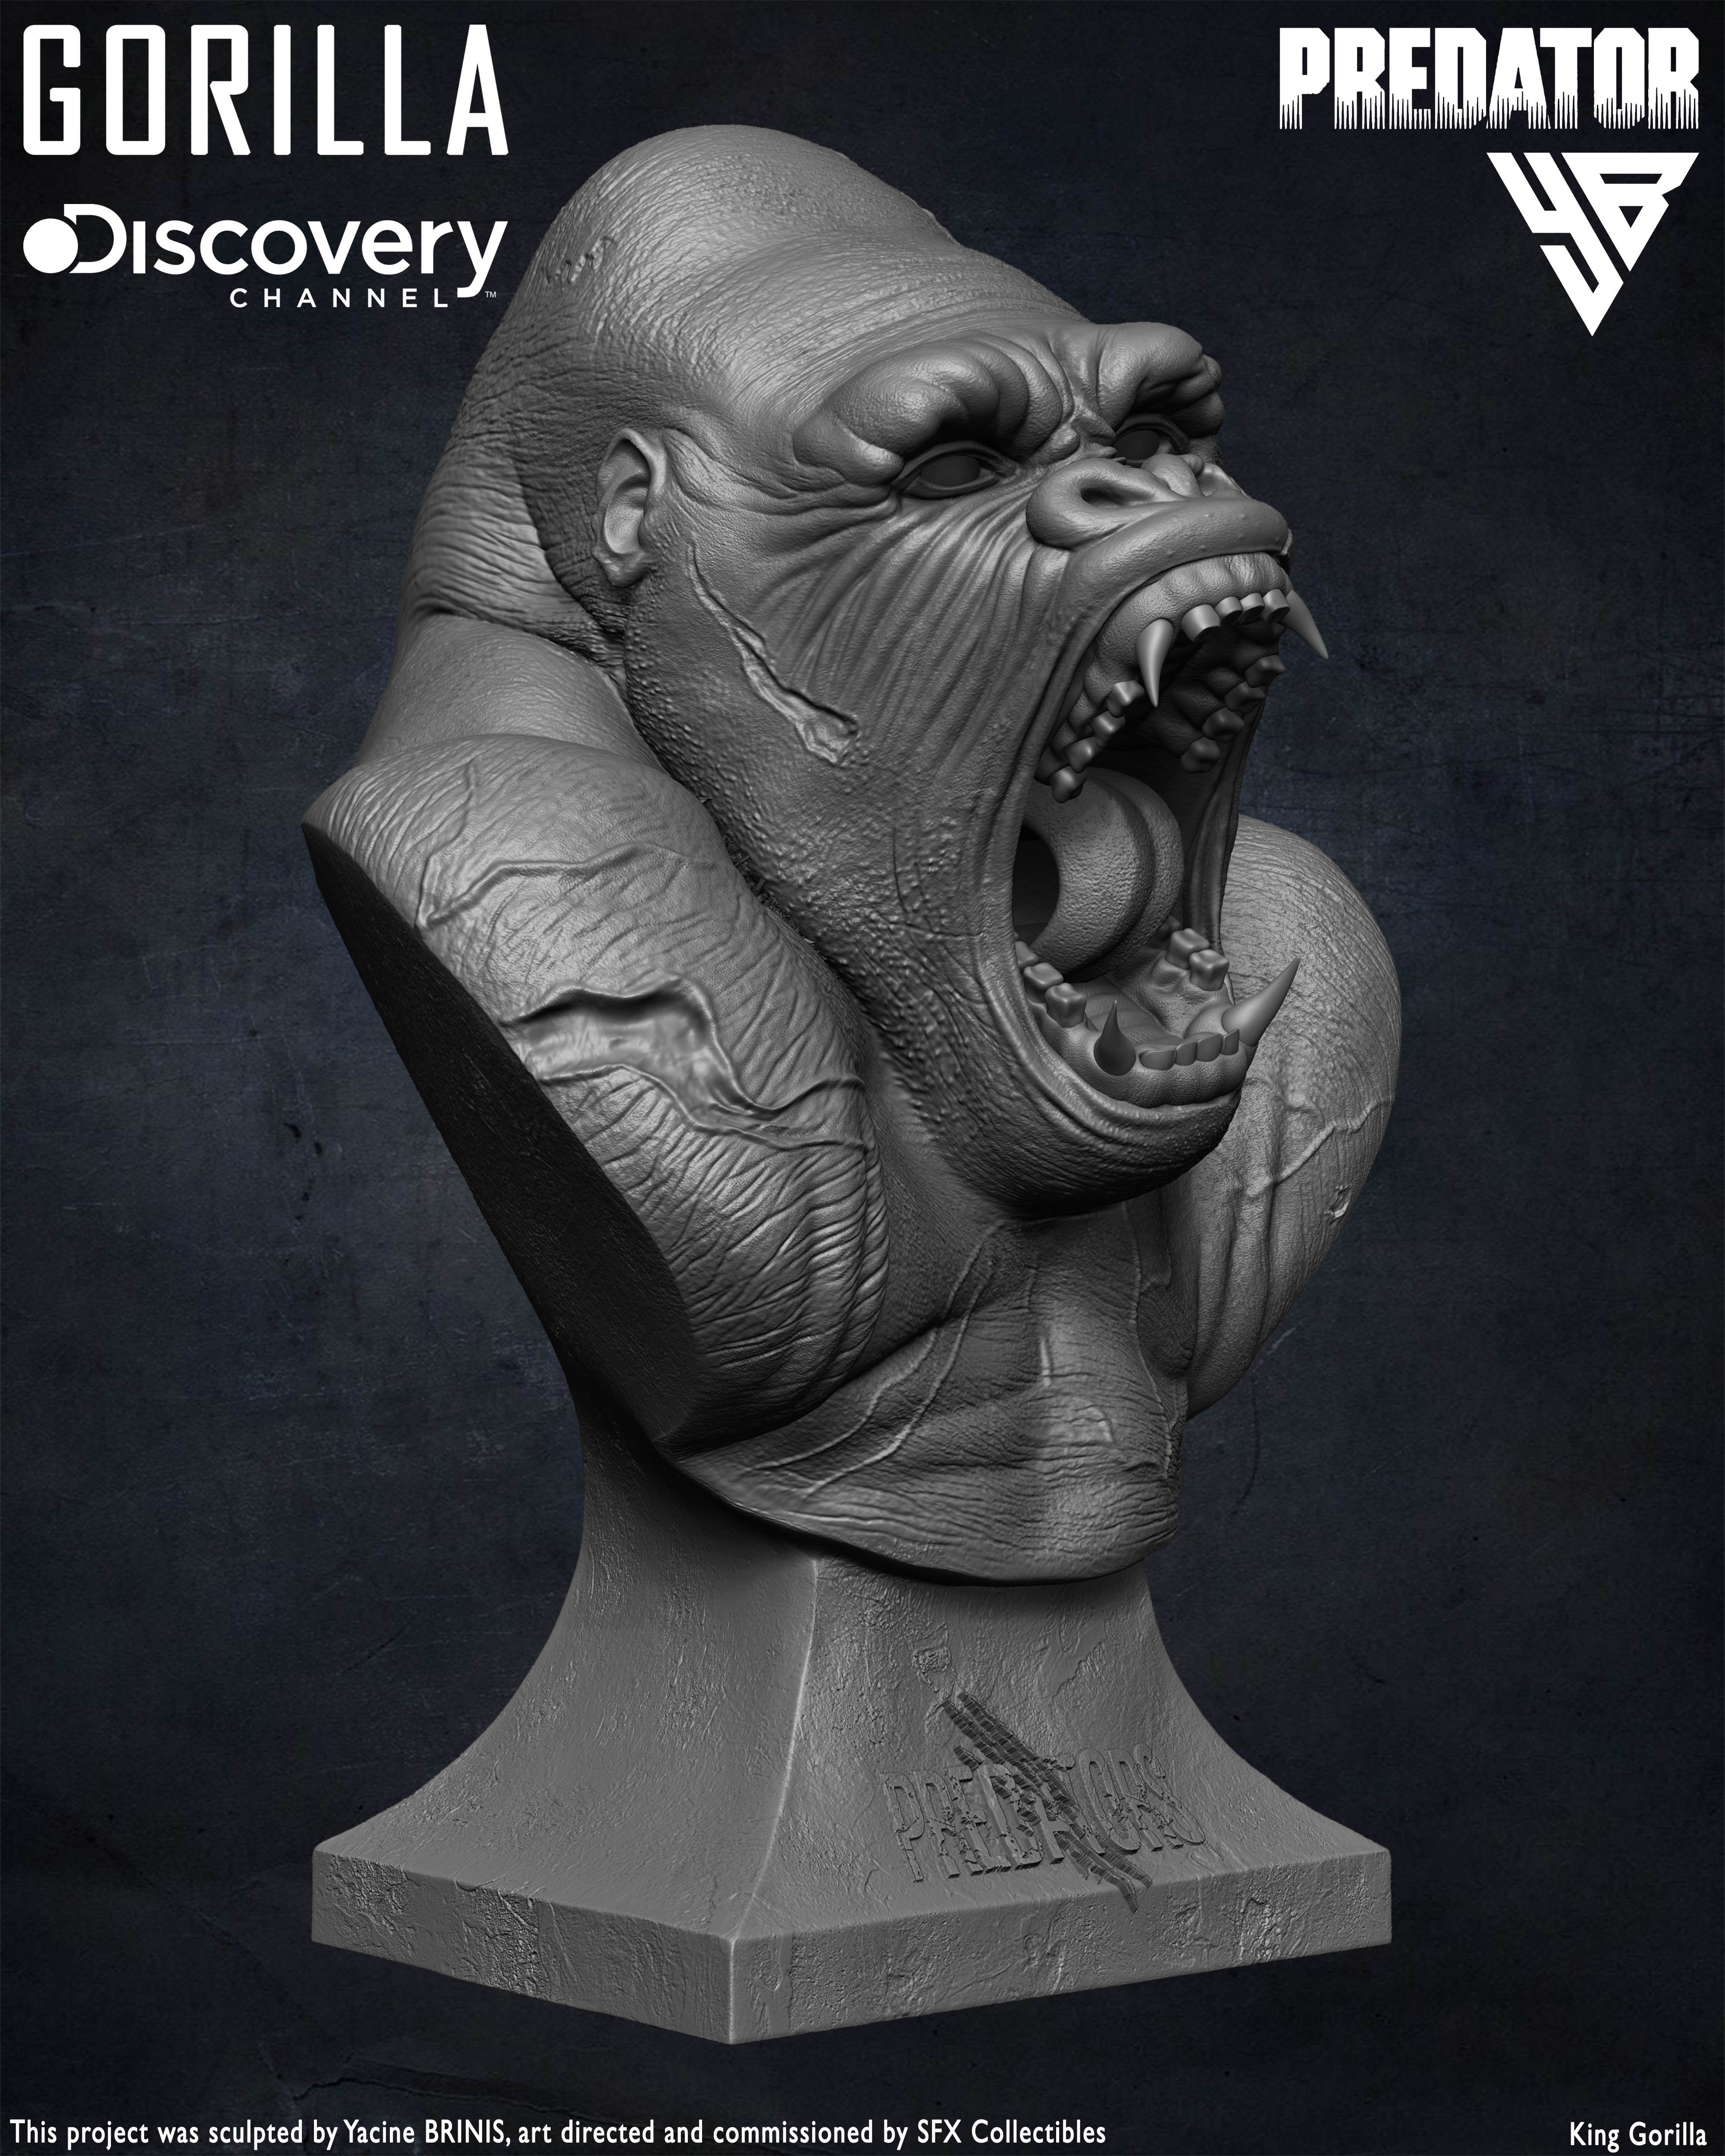 King Gorilla Predator sculpted by Yacine BRINIS 002